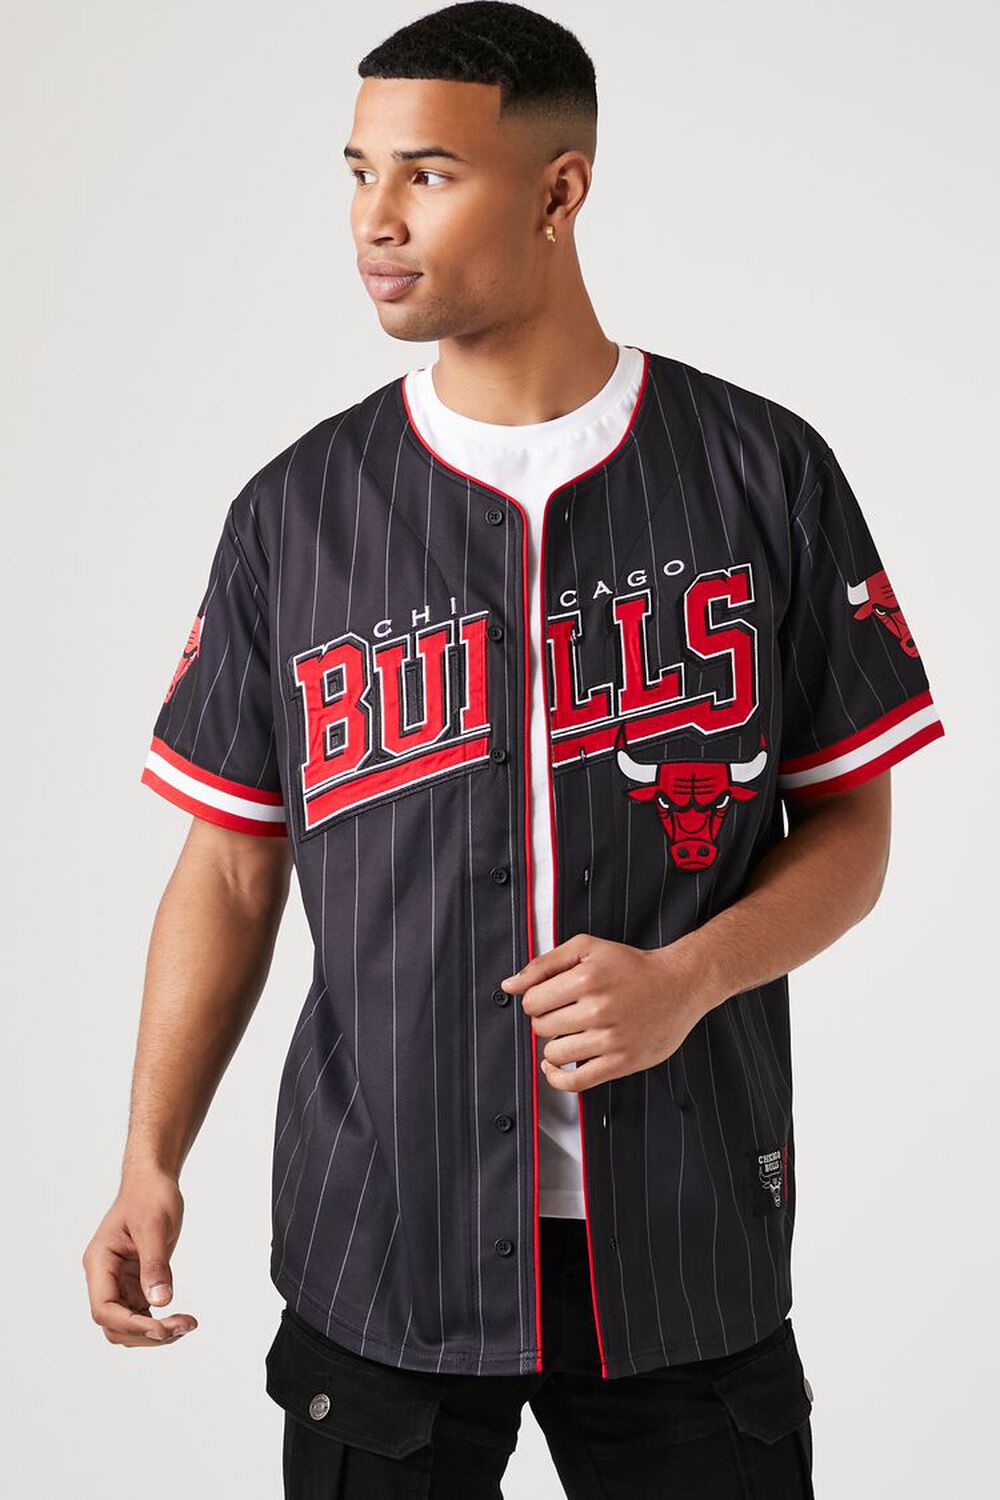 uniform chicago bulls jersey